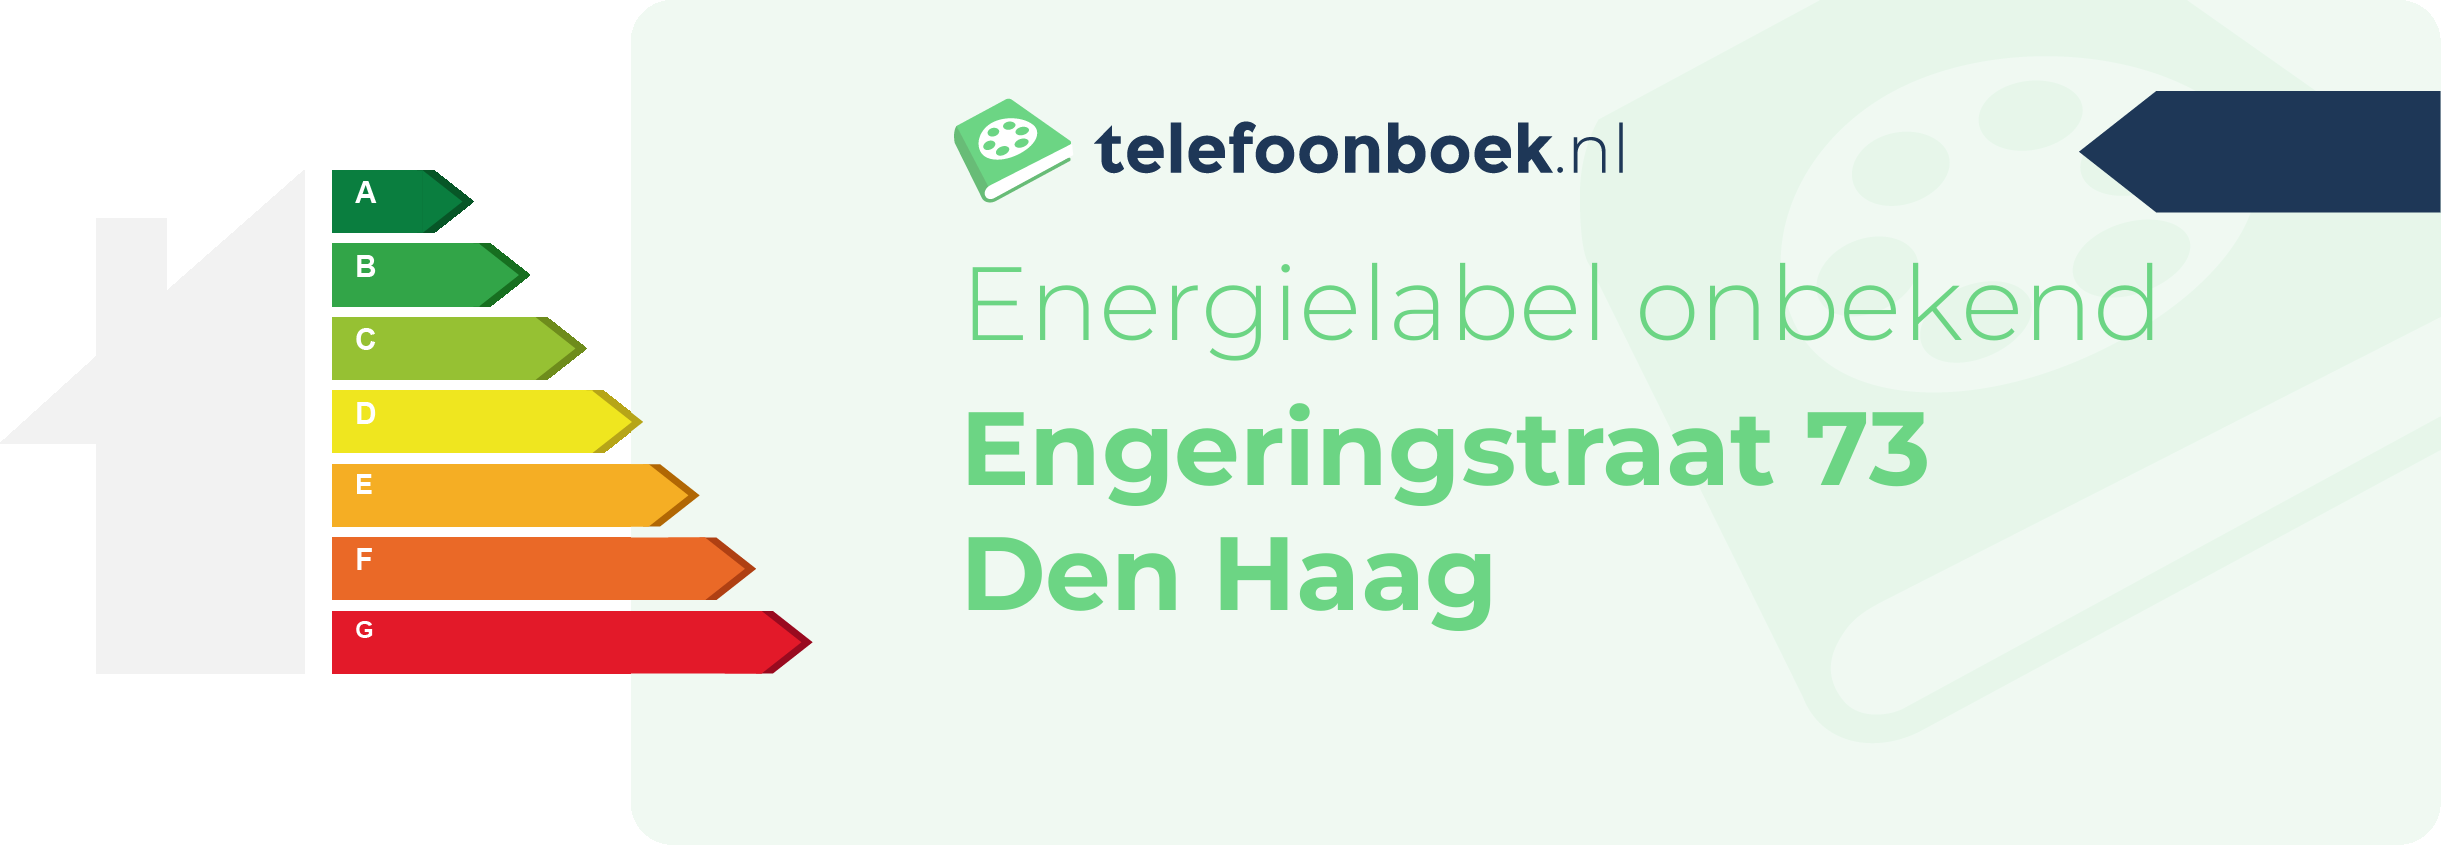 Energielabel Engeringstraat 73 Den Haag